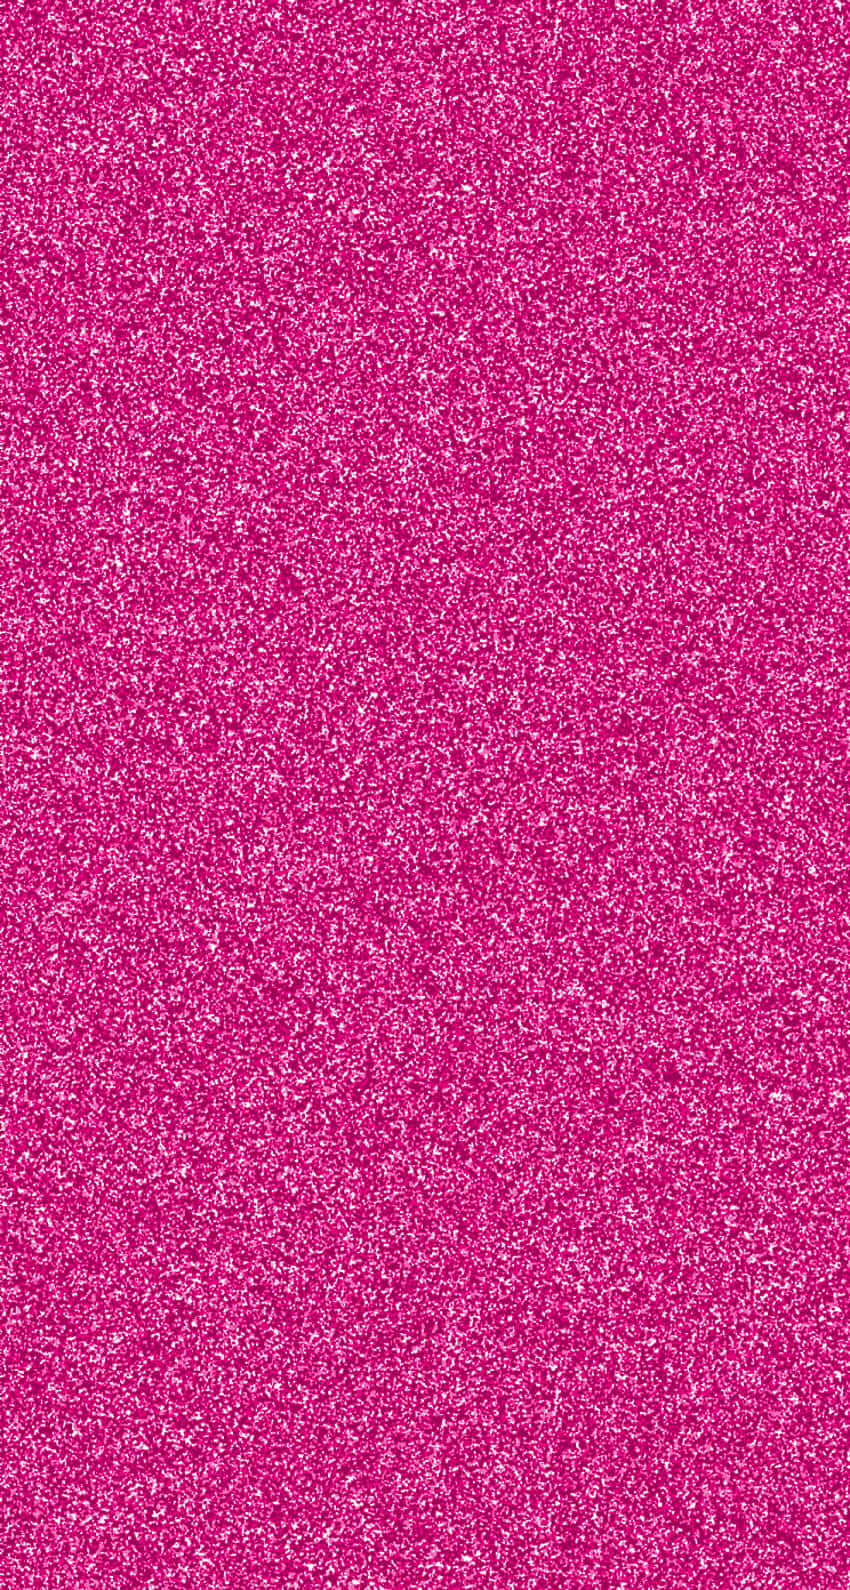 Mesmerizing Hot Pink Glitter Background